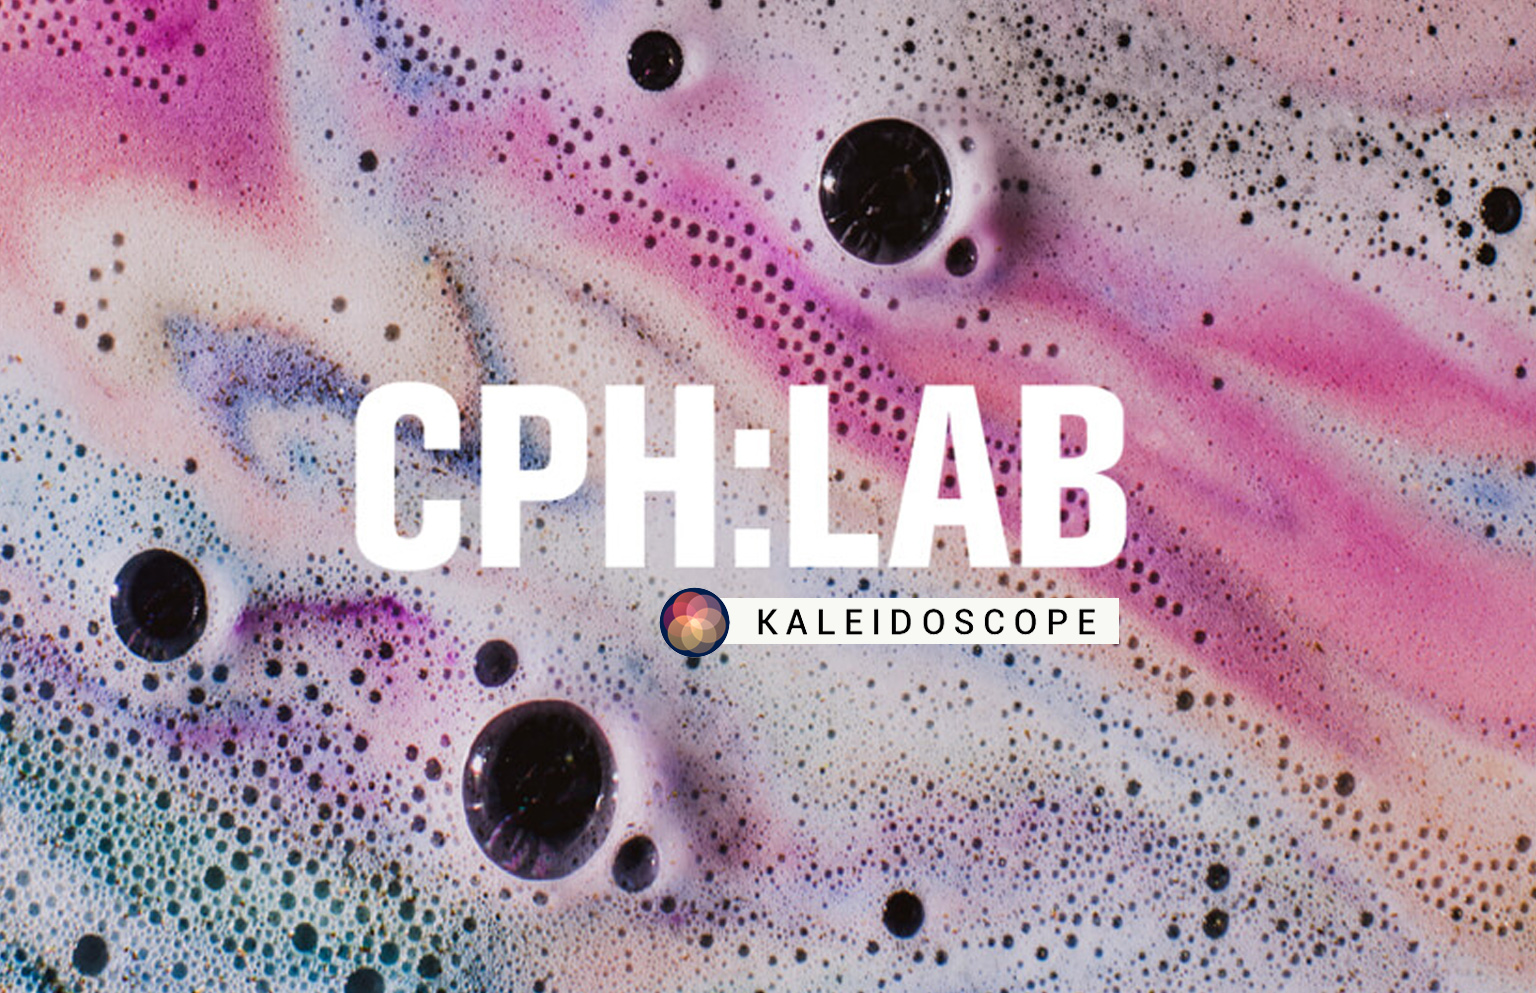 Exploring borders presented at CPH: LAB on Kaleidoscope